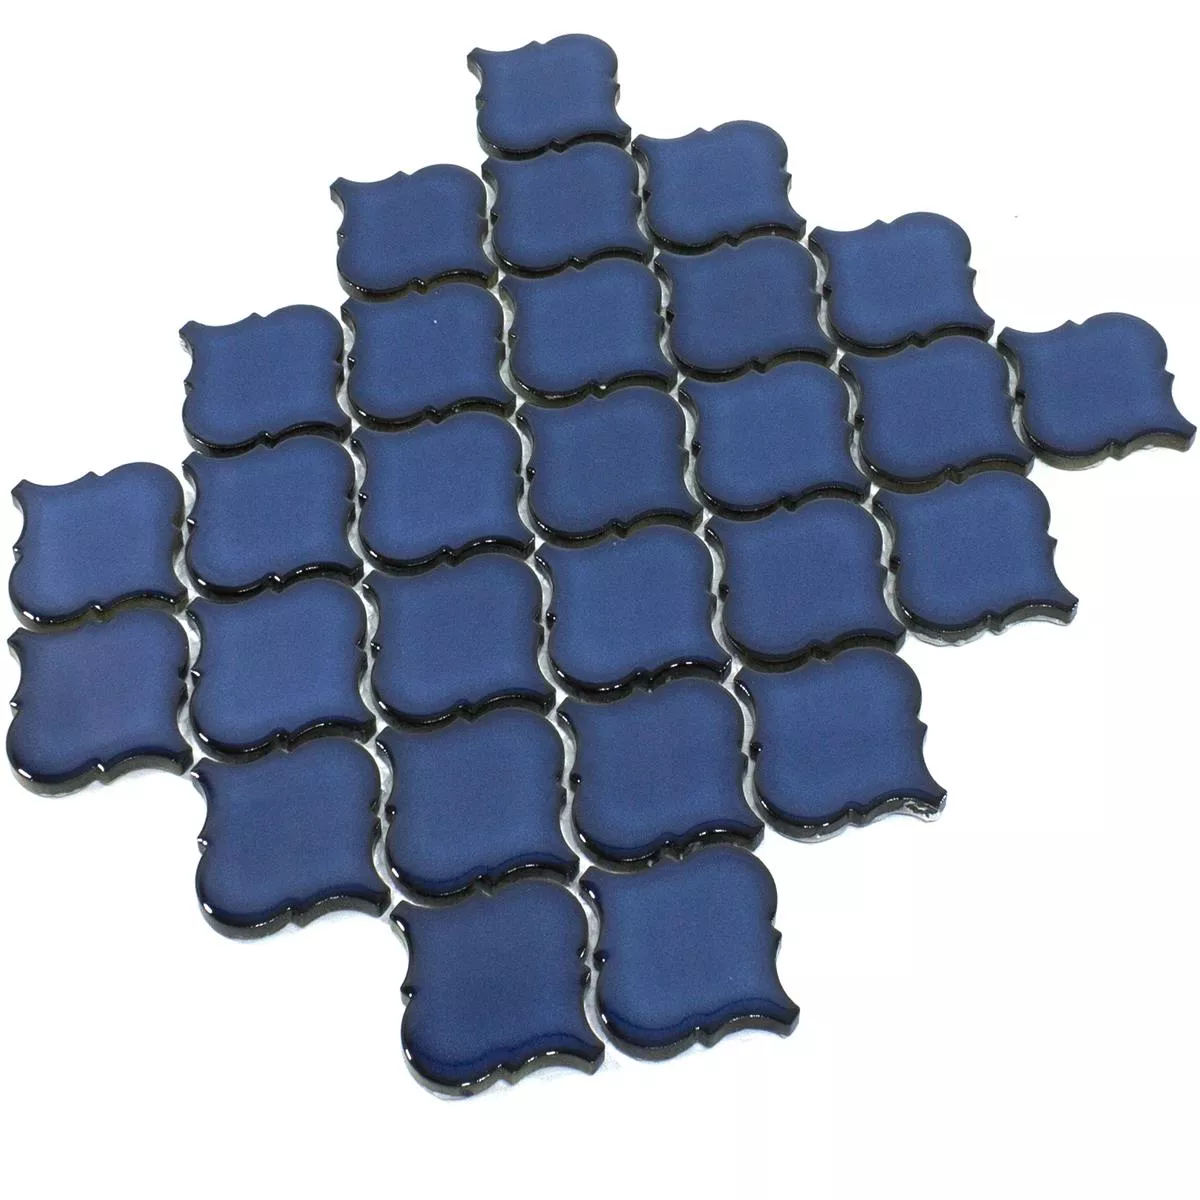 Sample Ceramic Mosaic Tiles Asmara Arabesque Blue